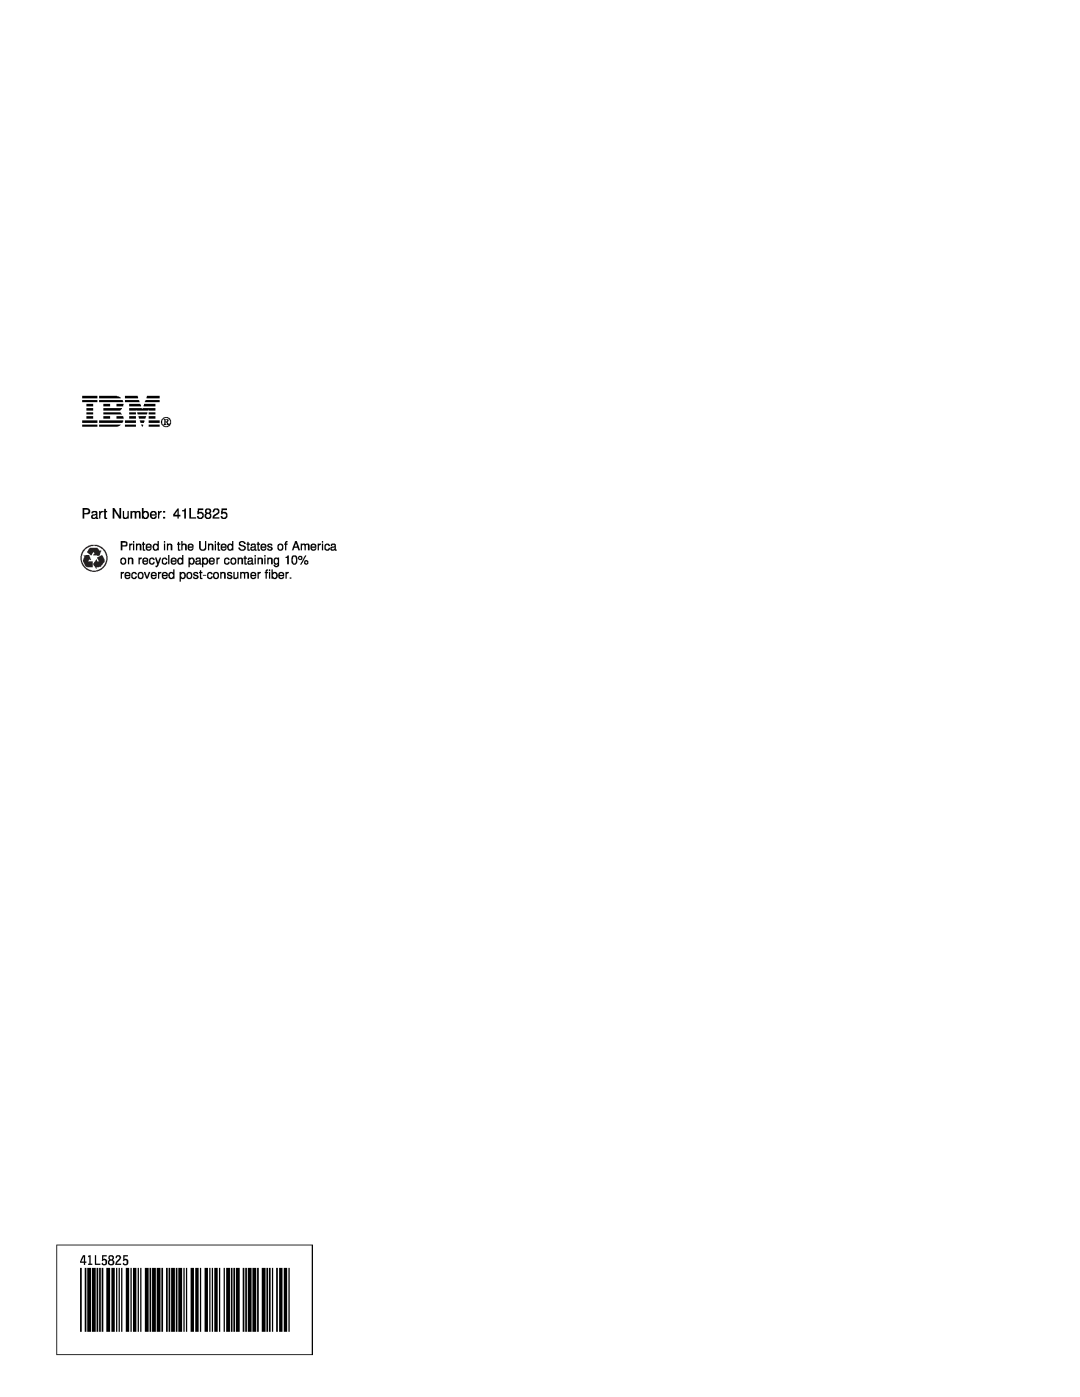 IBM ARTIC960RxD manual Ibm, Part Number 41L5825 